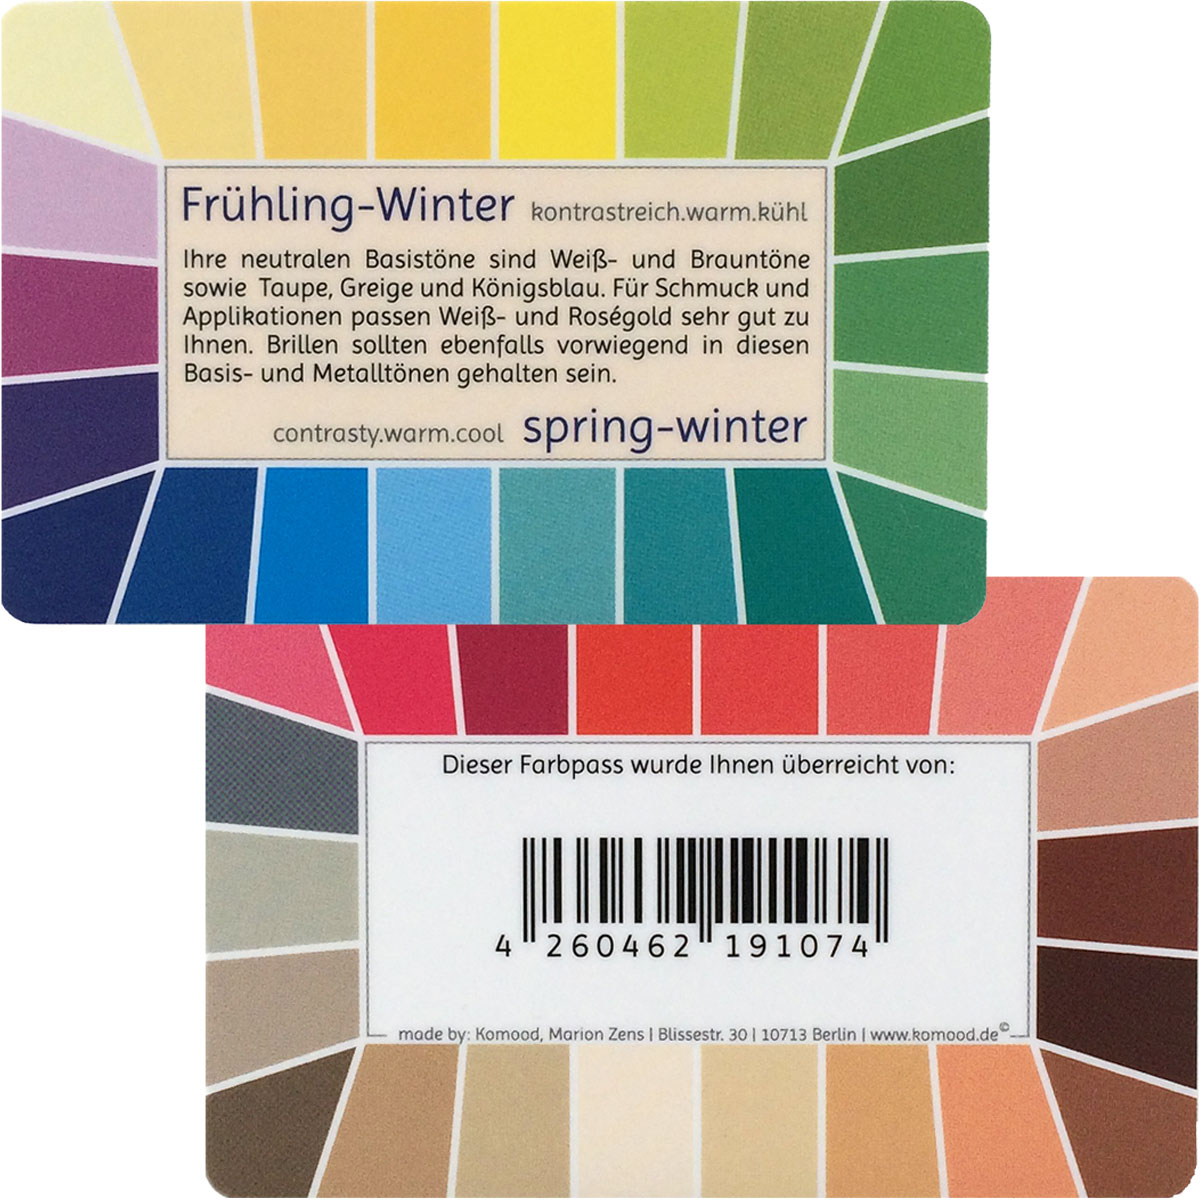 Farbpass Frühling-Winter - Loop, 44 Farben